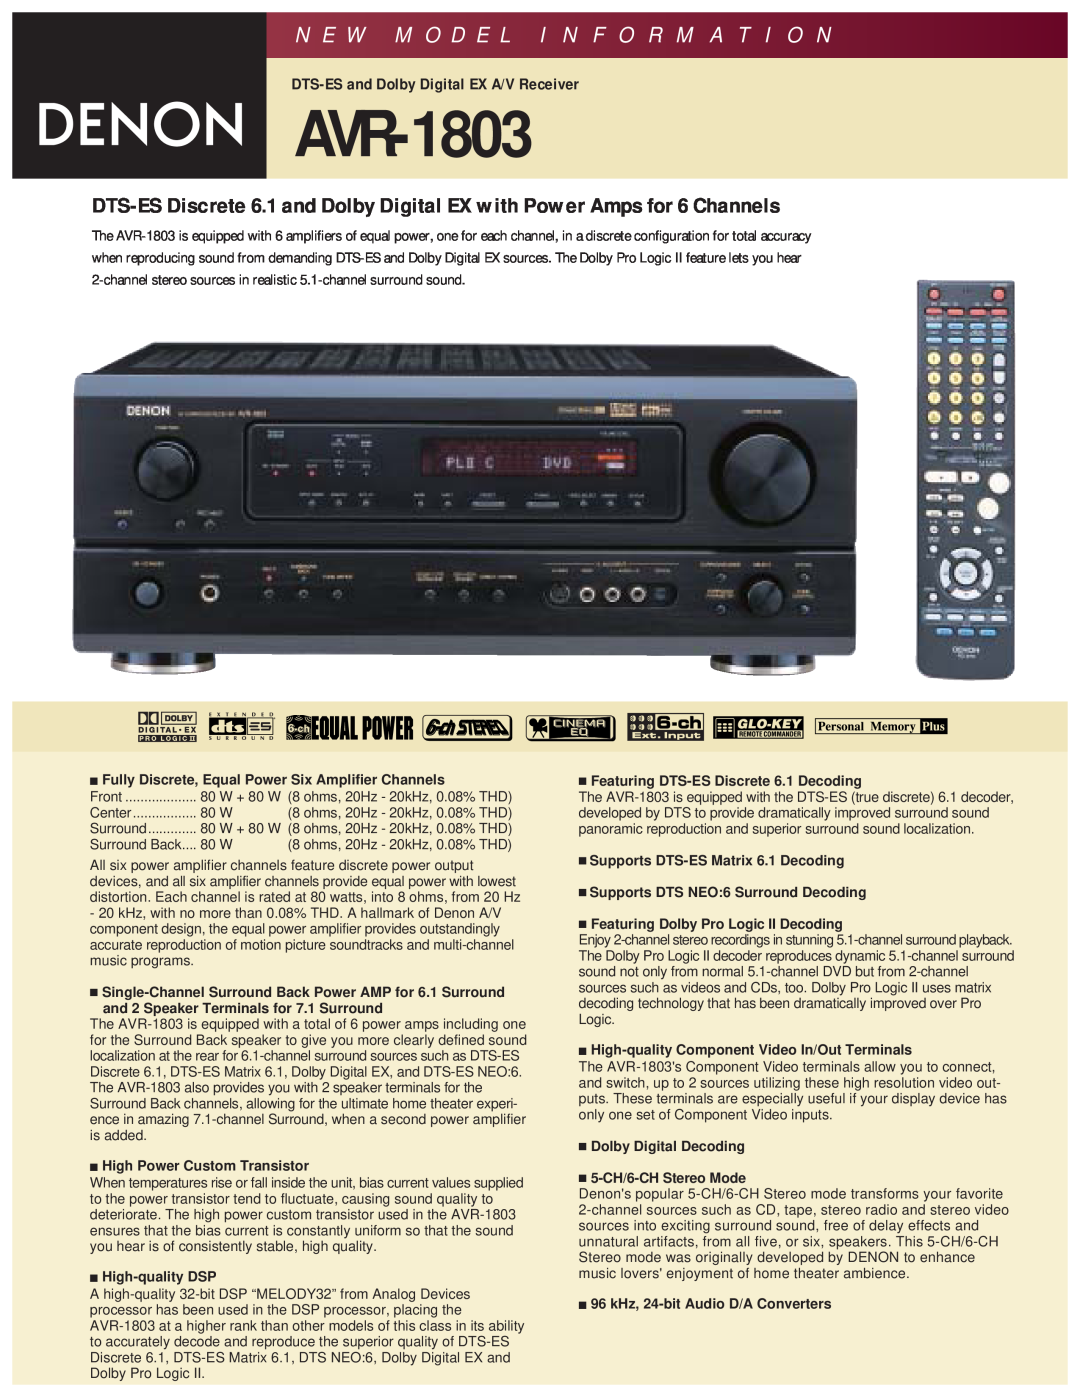 Denon AVR-1803 manual N E W M O D E L I N F O R M A T I O N, DTS-ESand Dolby Digital EX A/V Receiver 